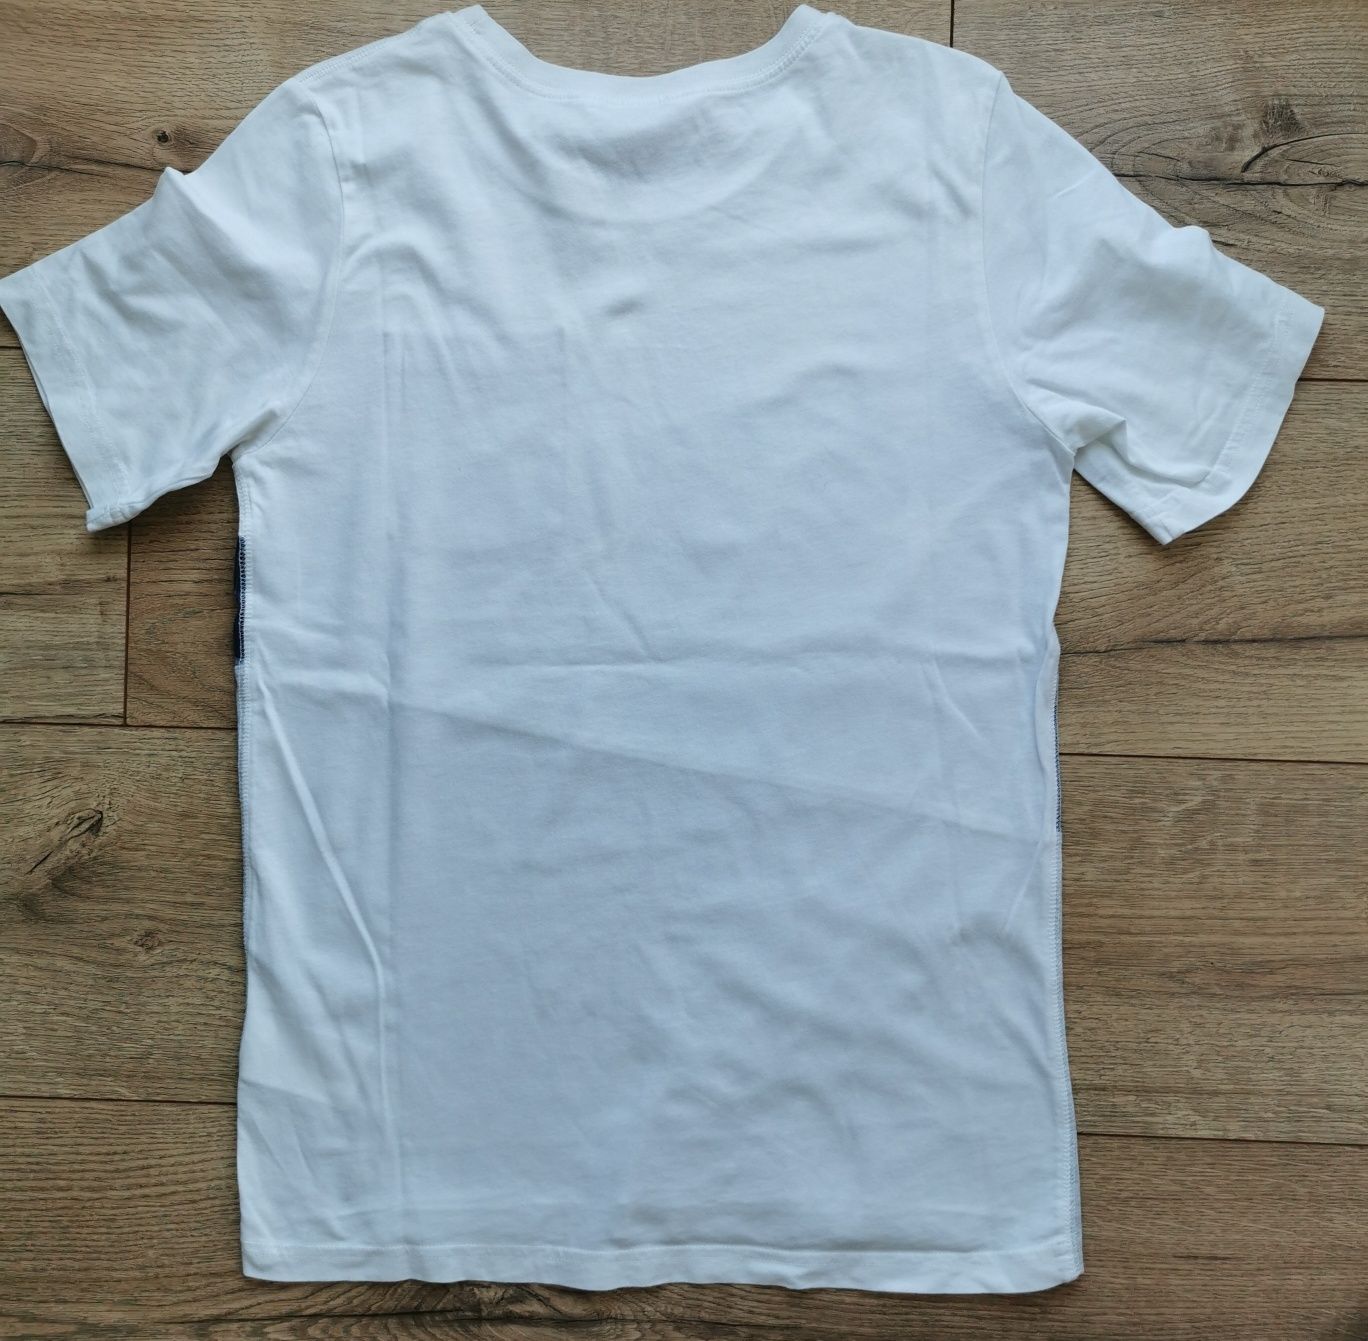 H&M T-shirt kolor biały, rozm. 146 - 152 cm